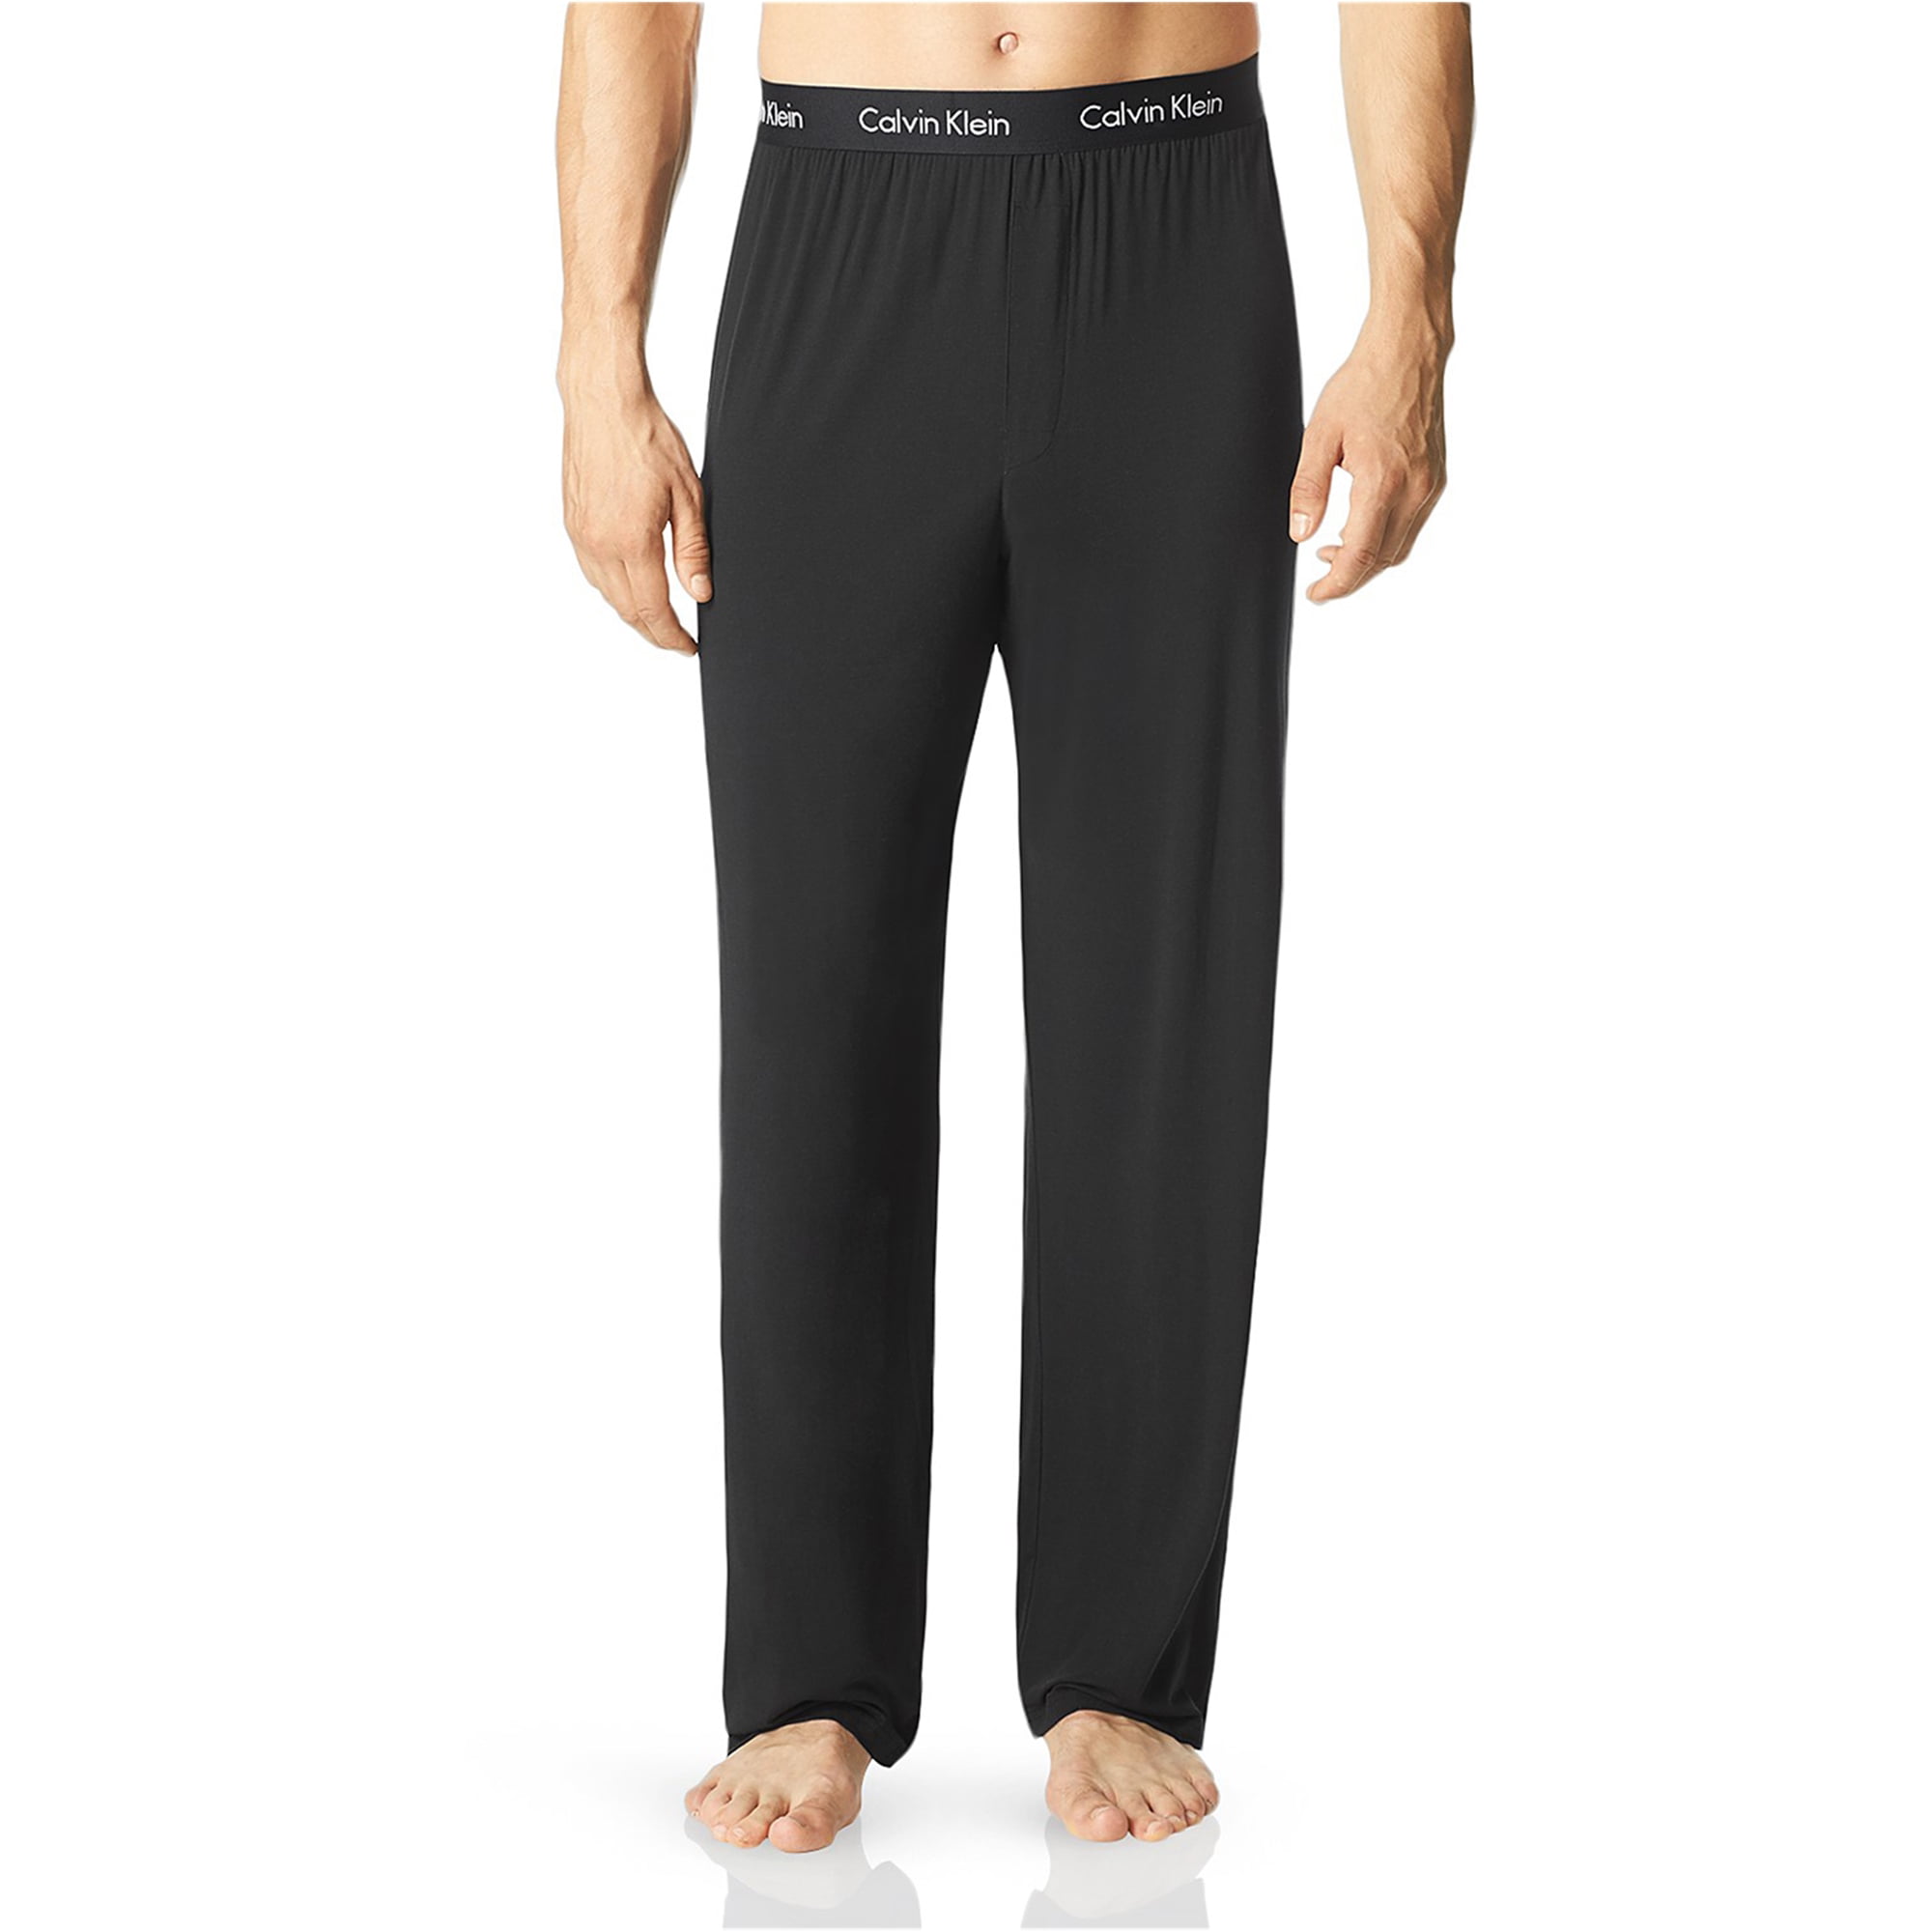 Calvin Klein - Calvin Klein Mens Micro Modal Pajama Lounge Pants